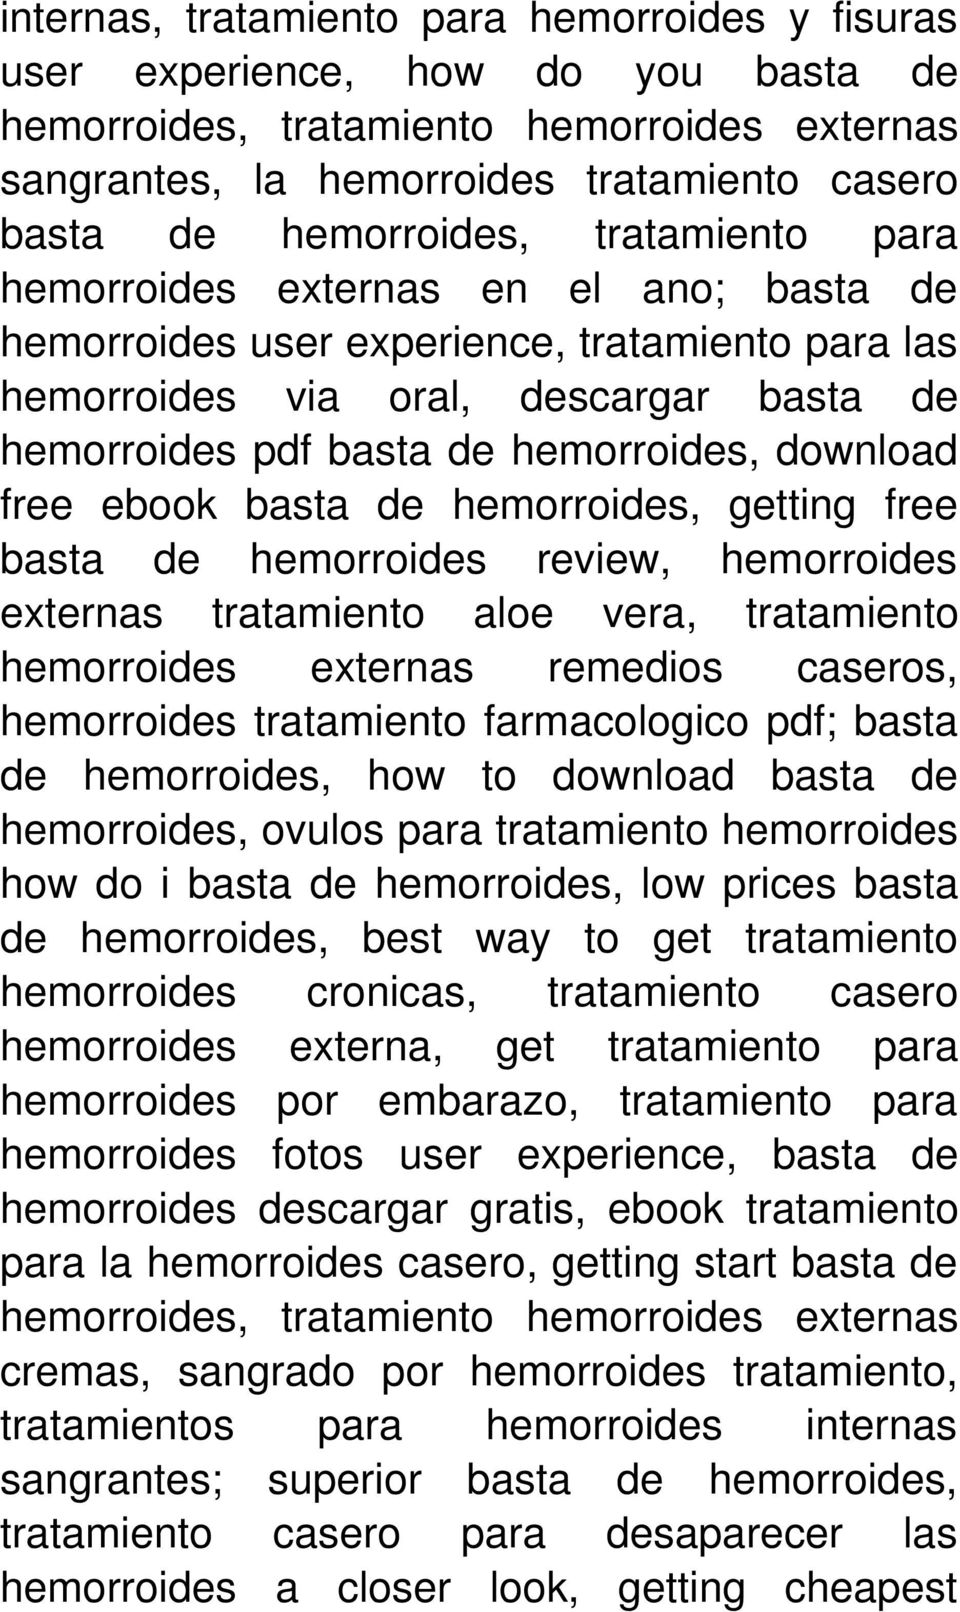 free ebook basta de hemorroides, getting free basta de hemorroides review, hemorroides externas tratamiento aloe vera, tratamiento hemorroides externas remedios caseros, hemorroides tratamiento